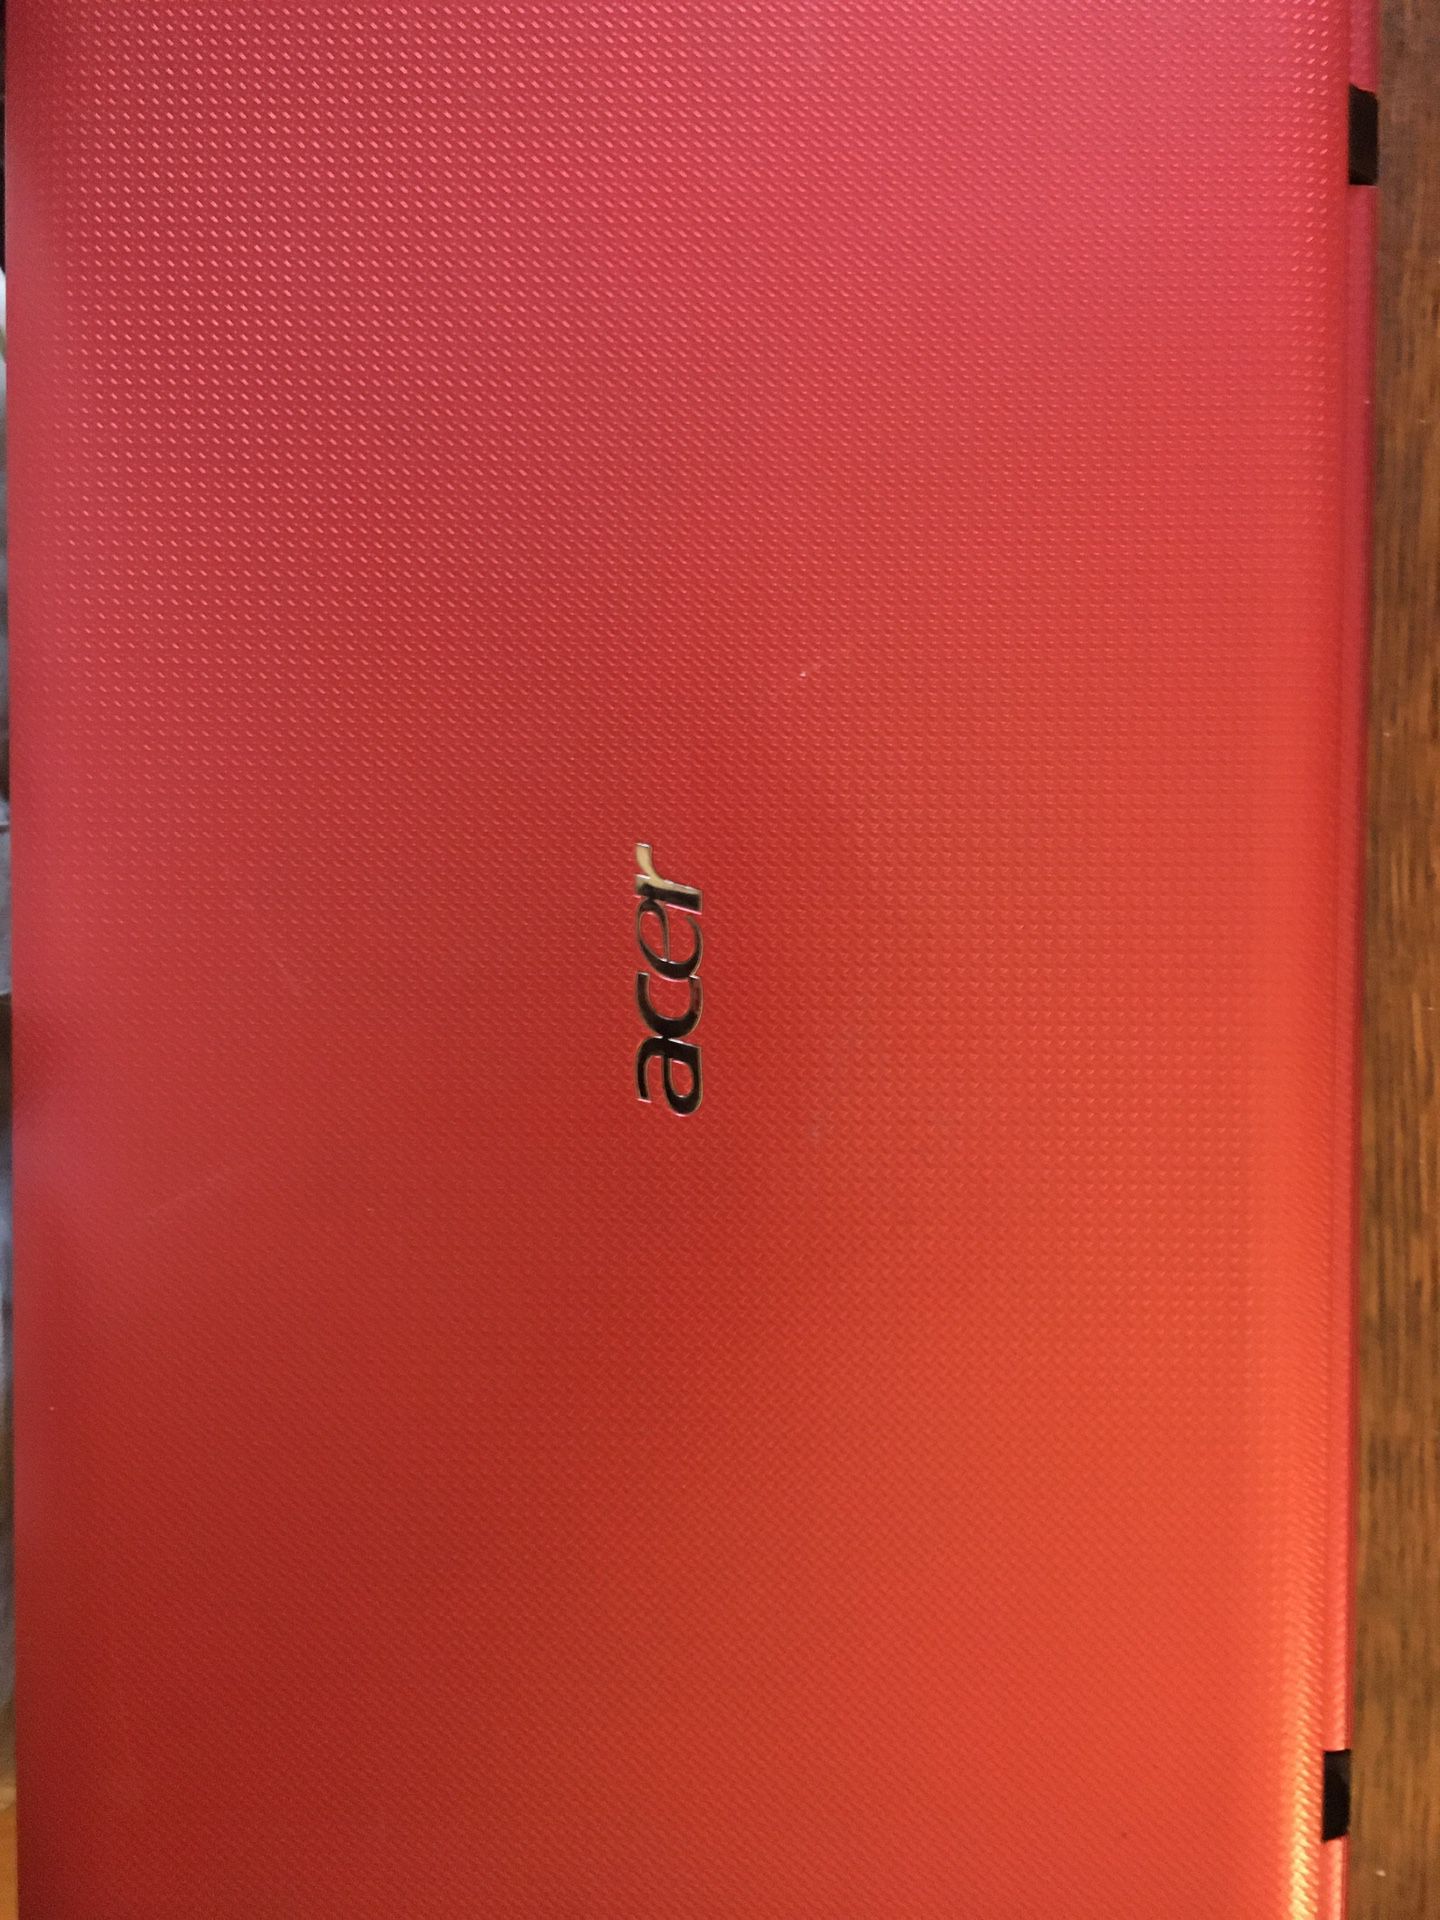 Acer Aspire Red laptop w/Windows 10 HDMI 3GB RAM 15.6” LED Screen